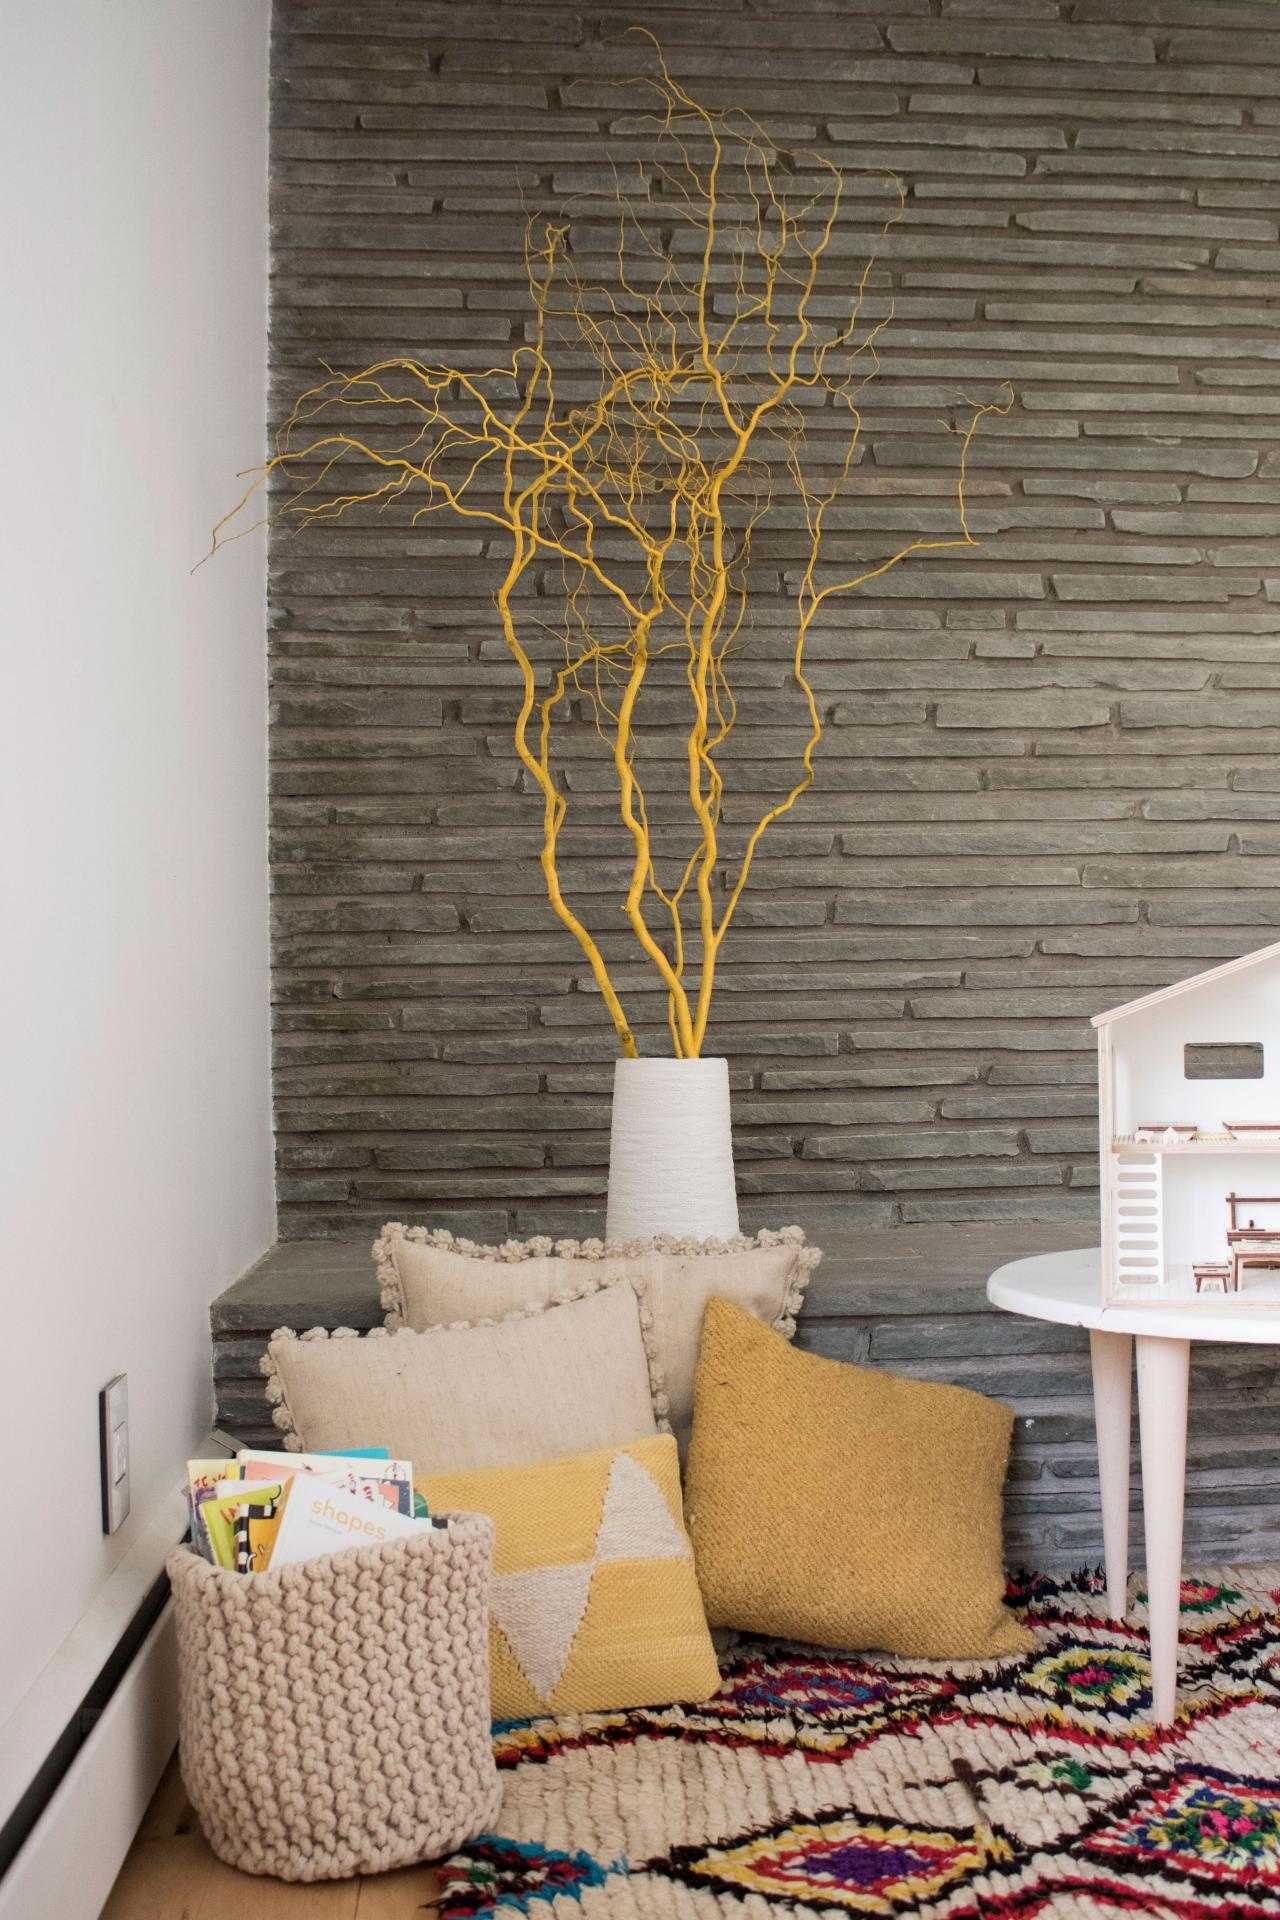 Creative Ideas for Branches as Home Decor | DIY Network ...